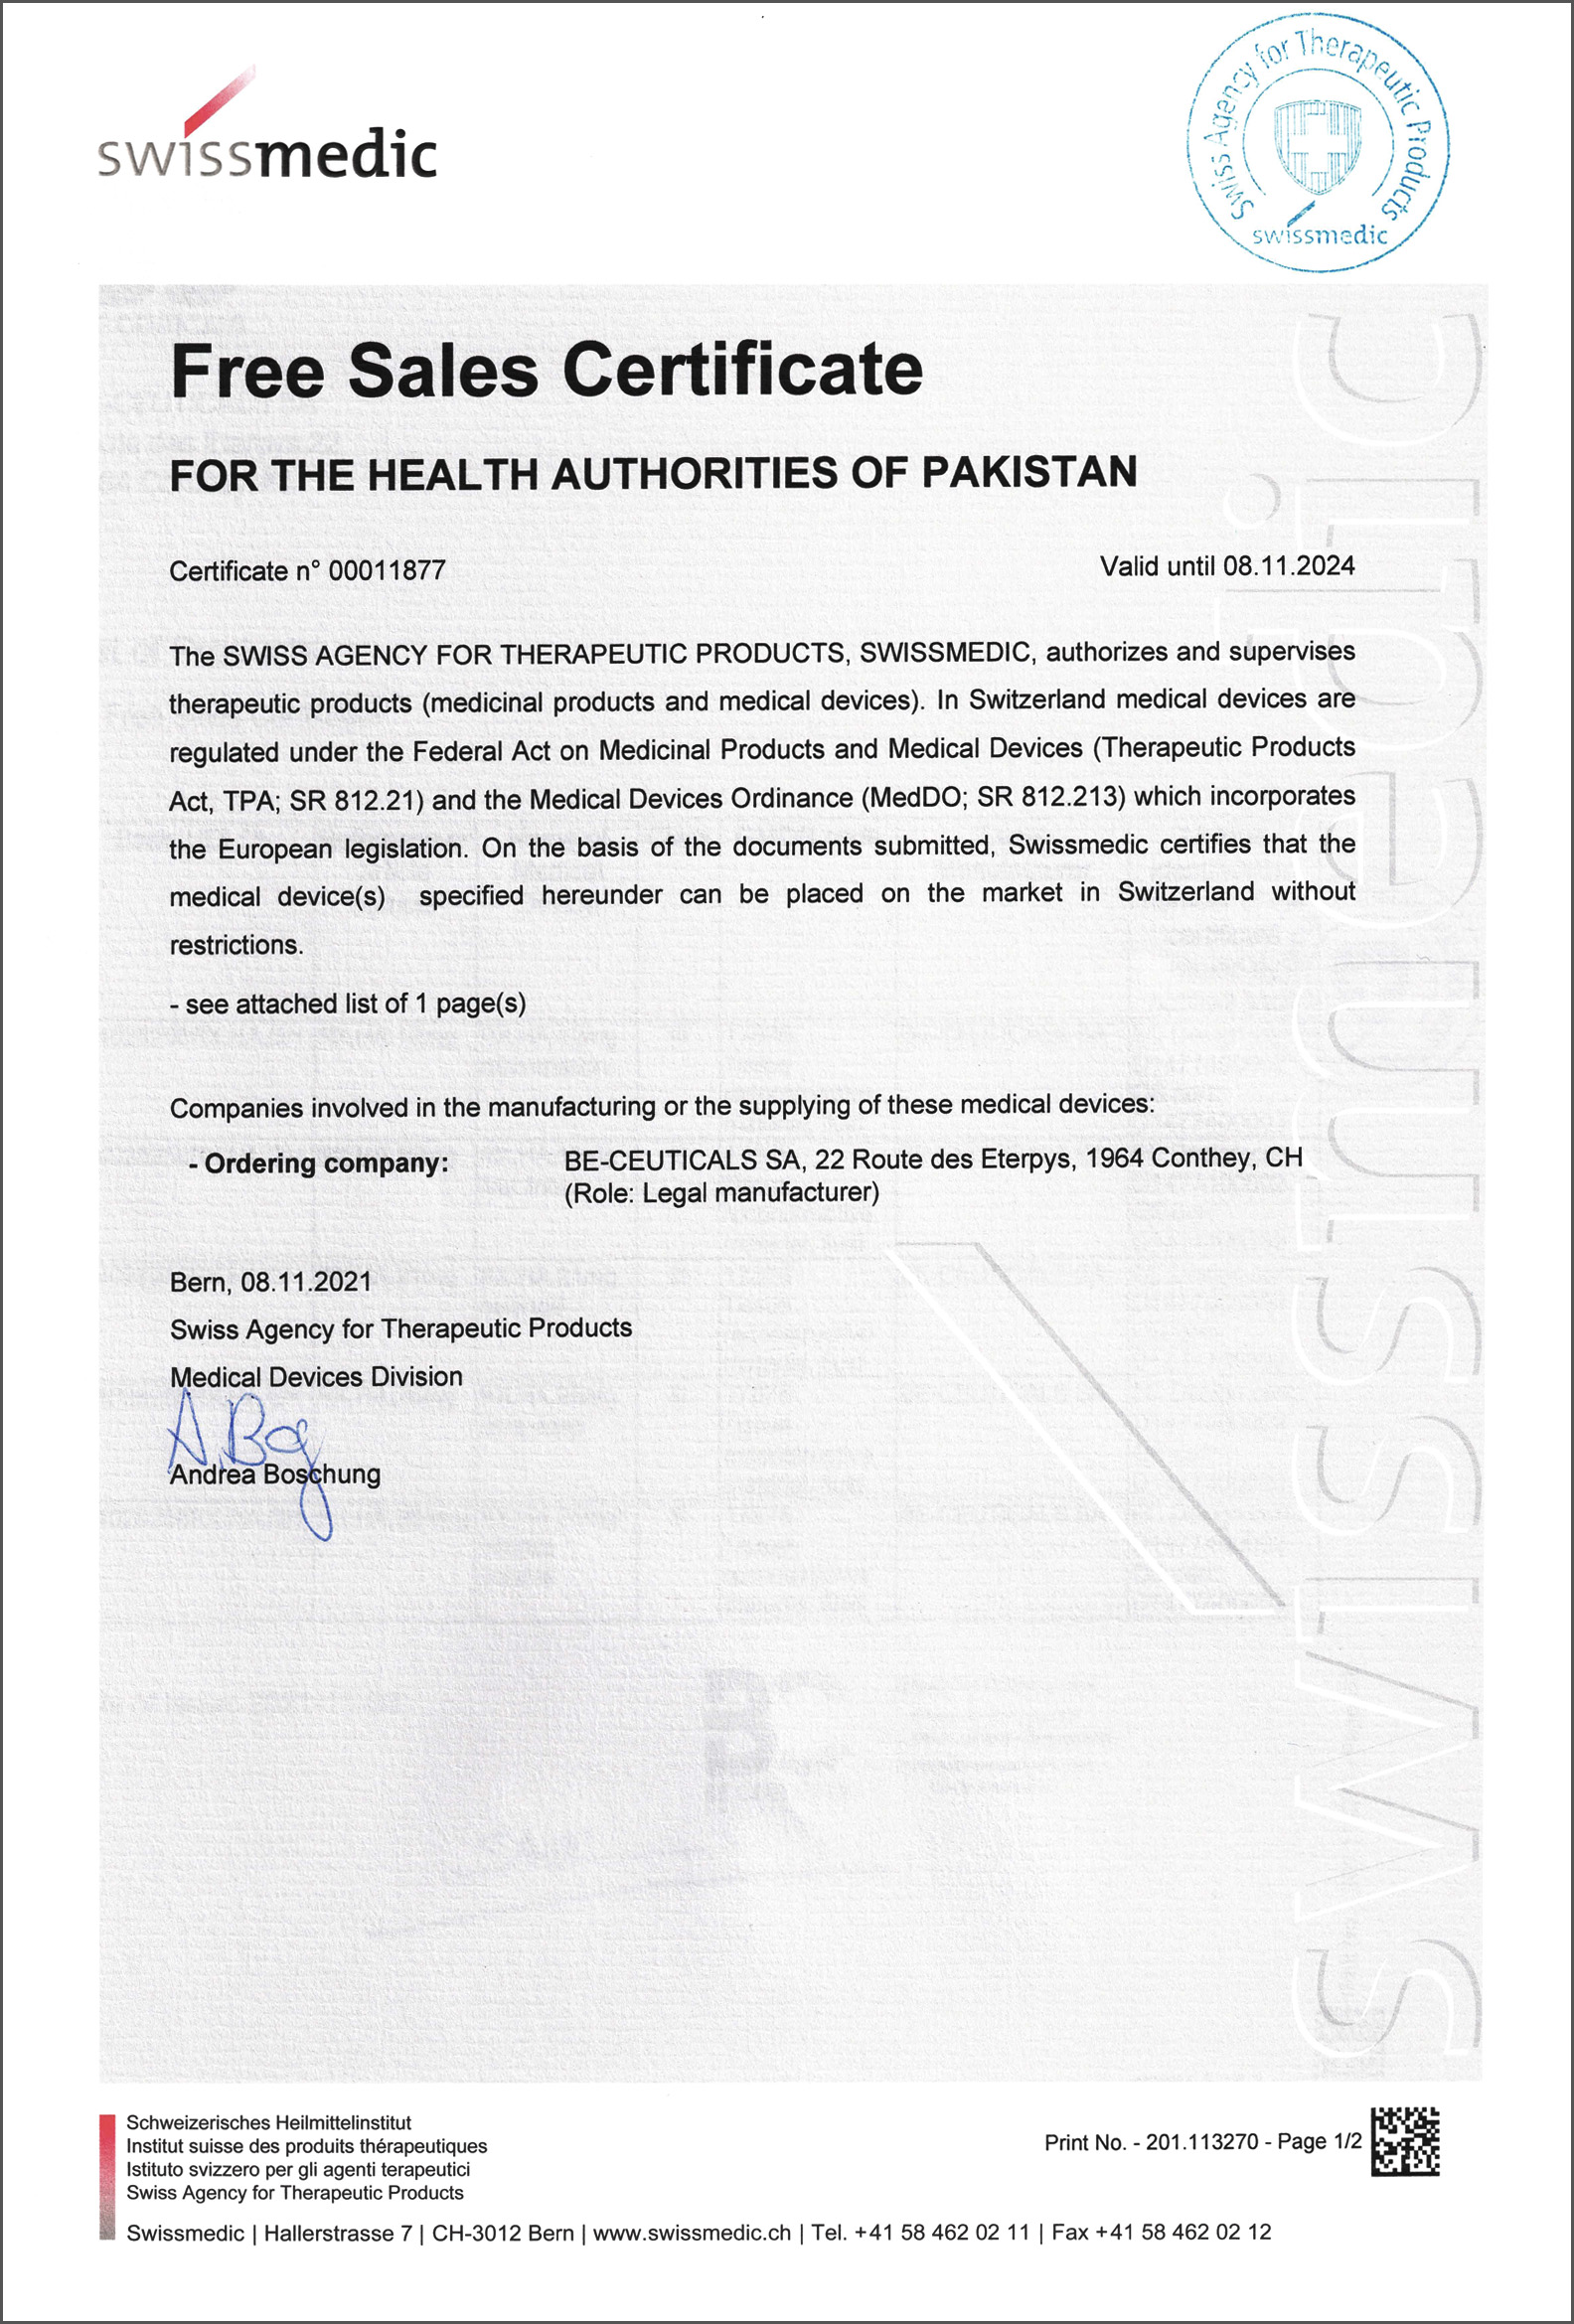 Swissmedic - Free Sales Certificate - Pakistan